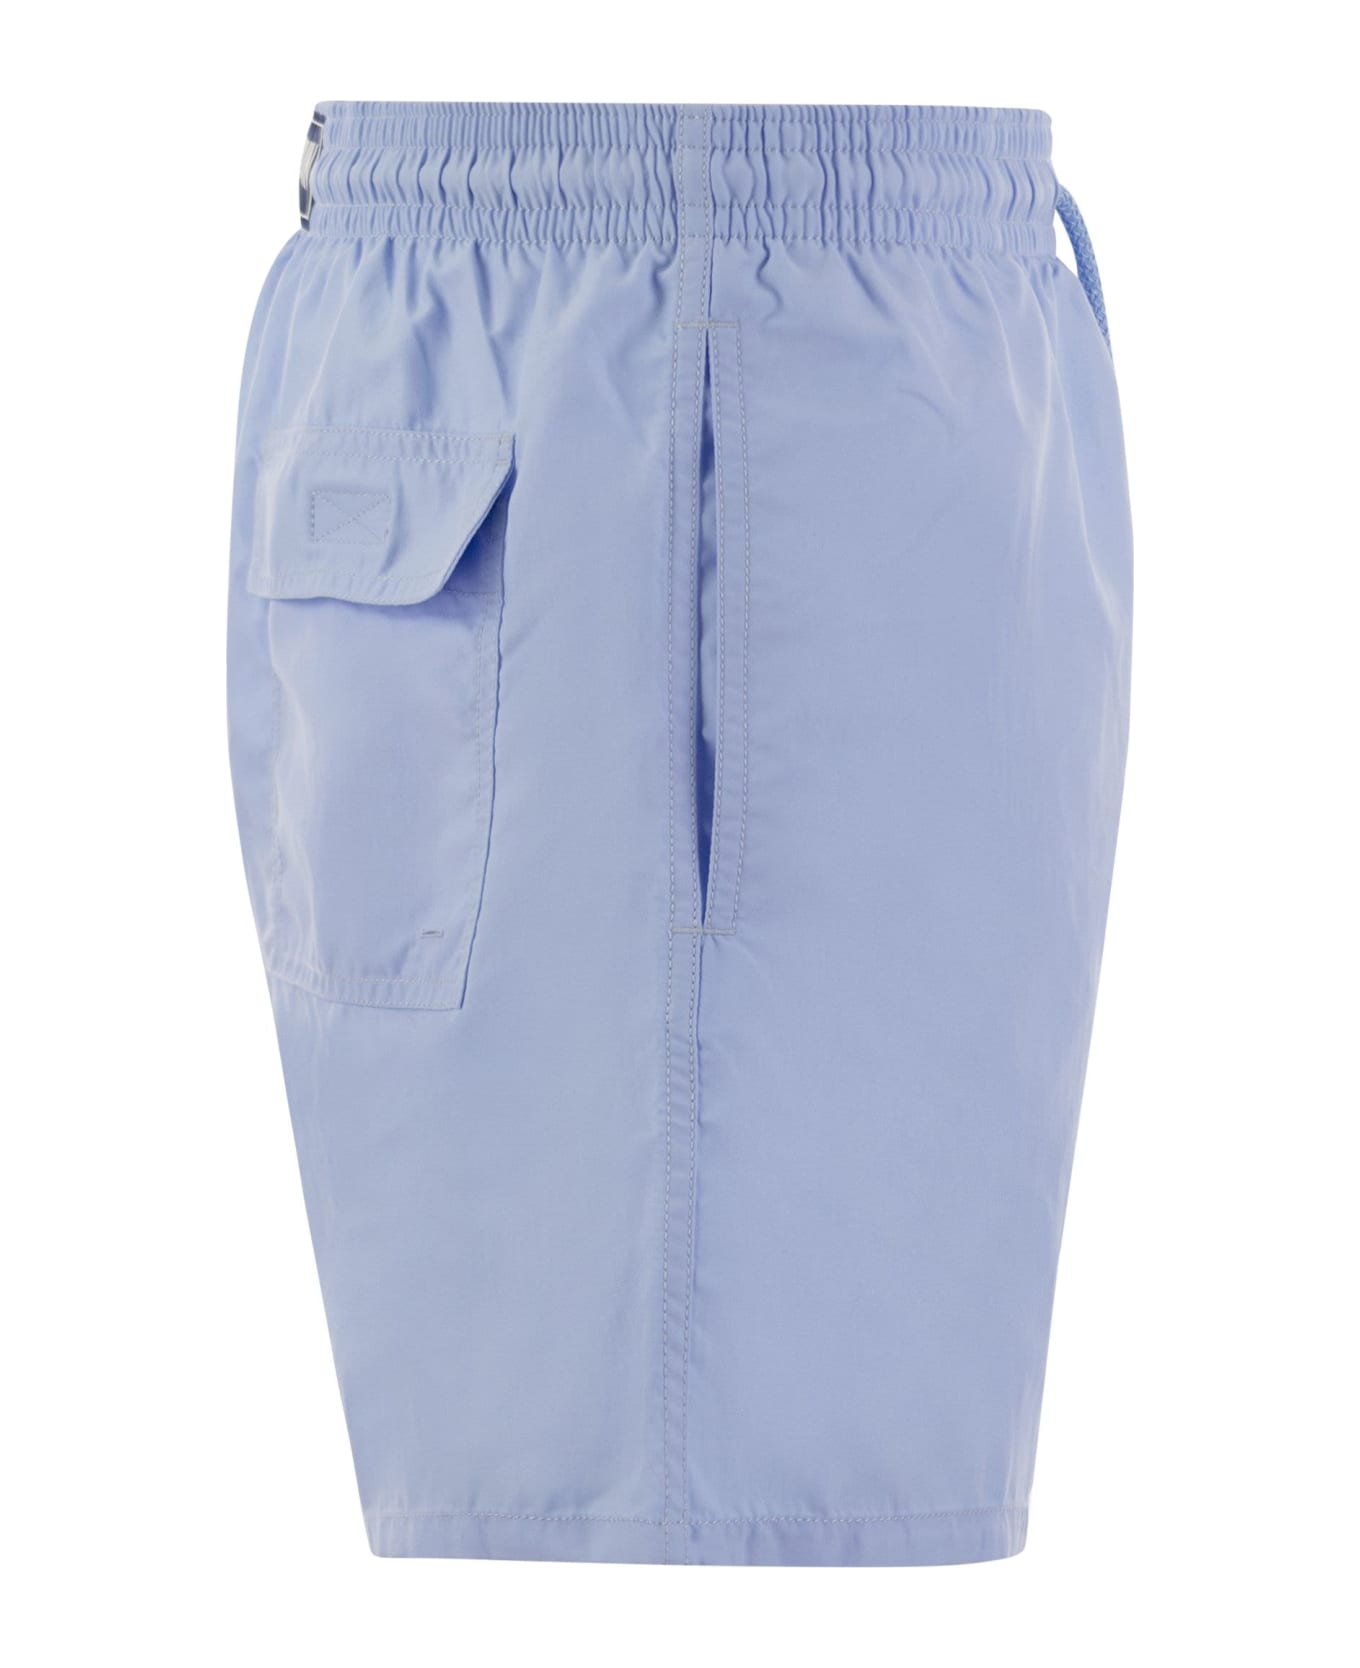 Vilebrequin Plain-coloured Beach Shorts - Light Blue 水着